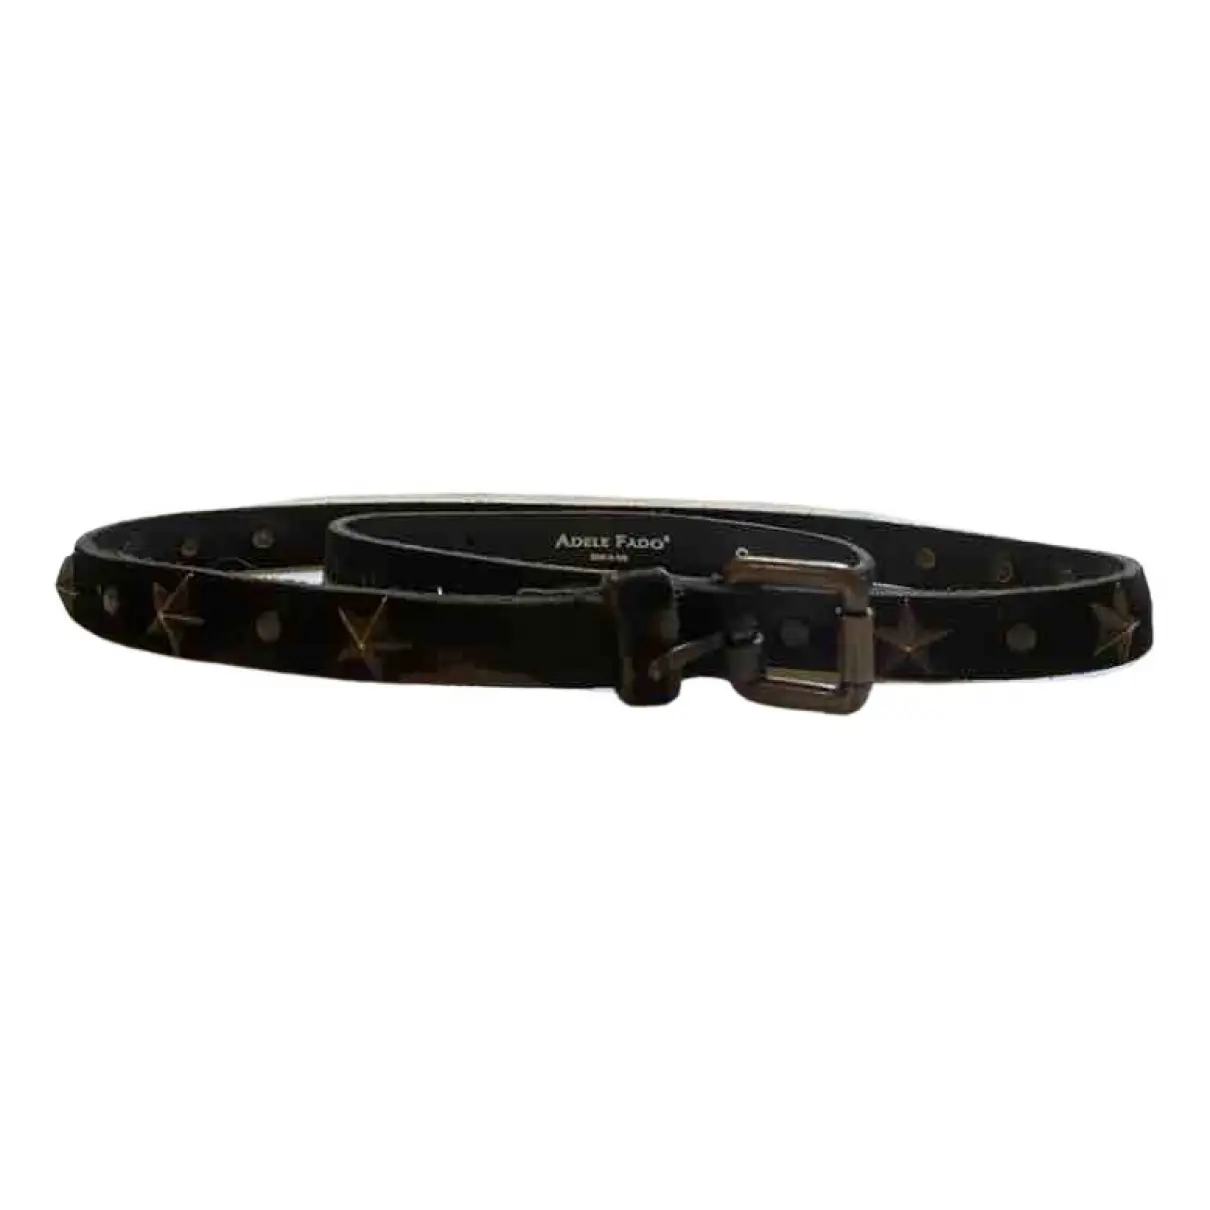 Leather belt Adèle Fado